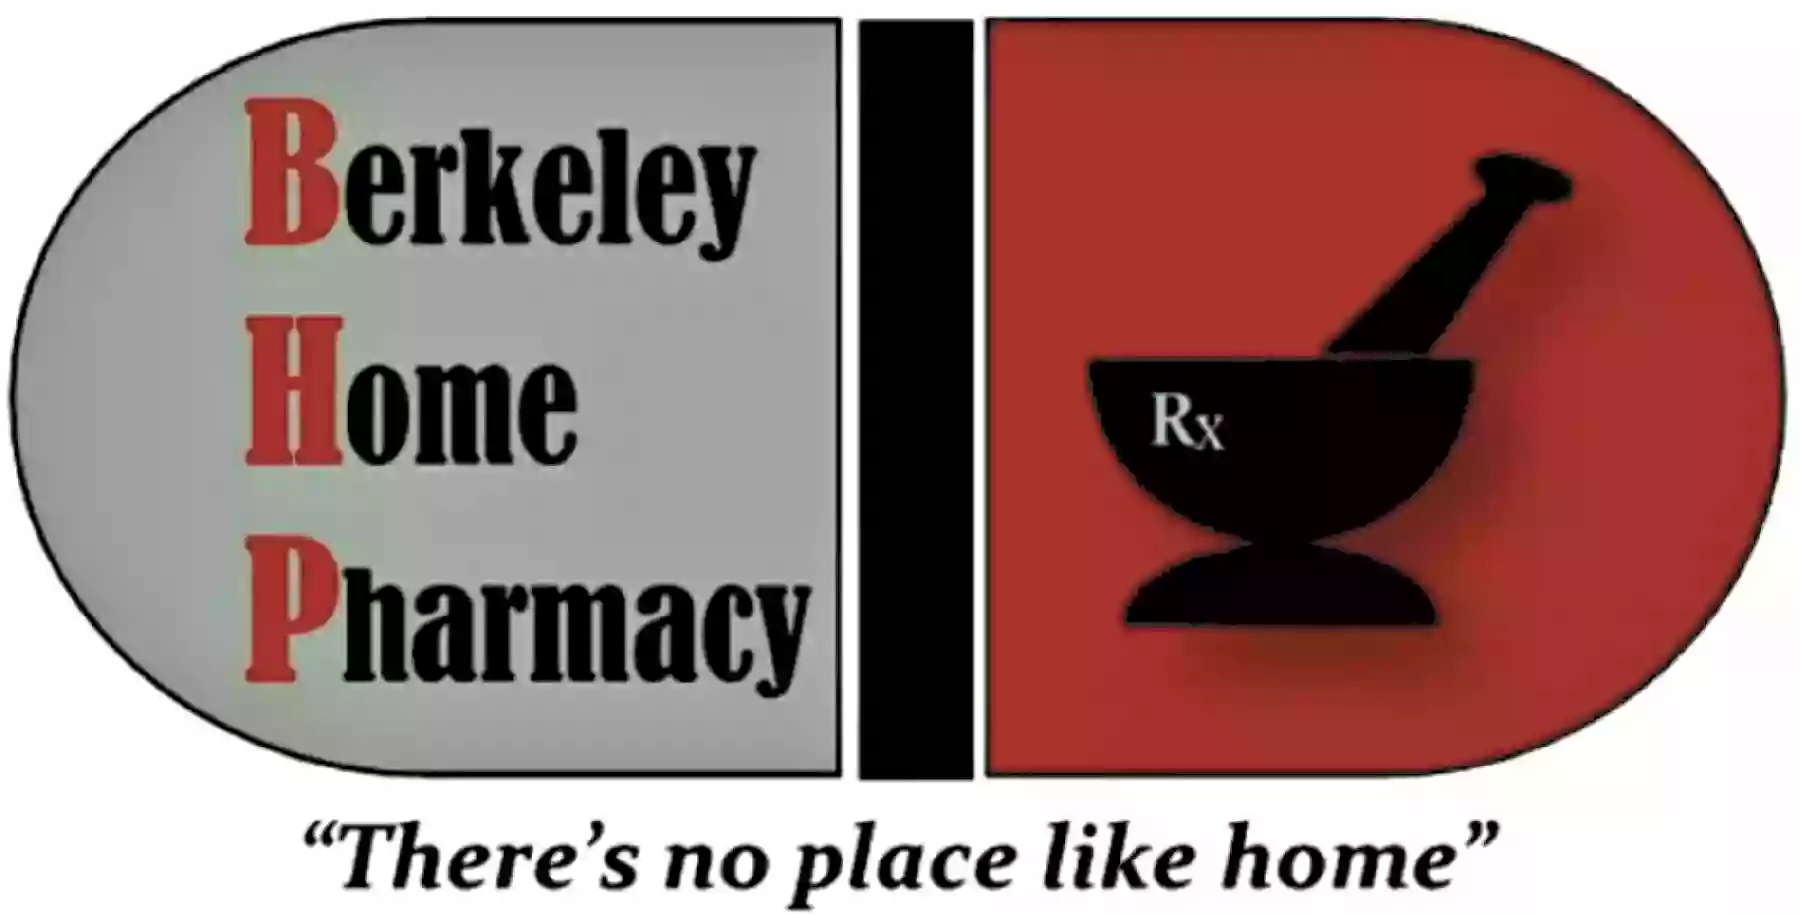 Berkeley Home Pharmacy